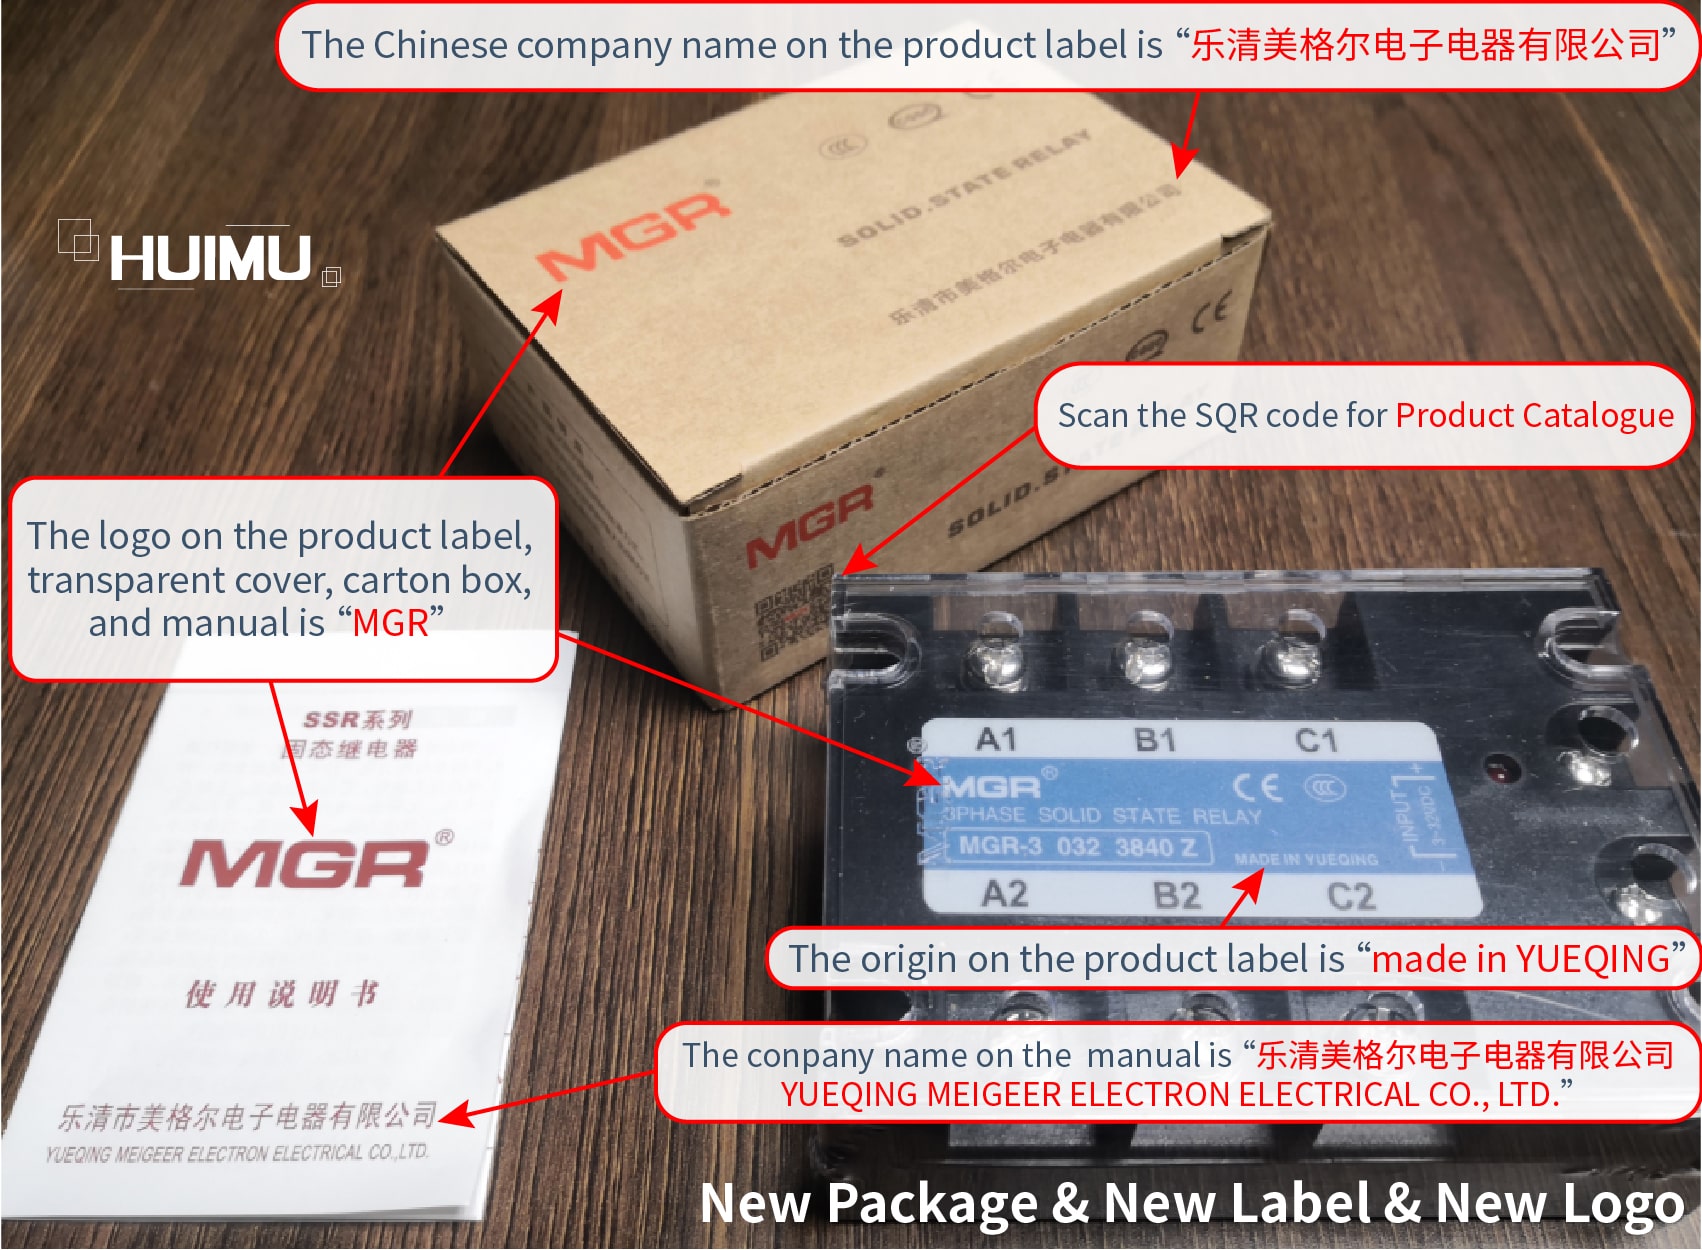 New Package & New Label & New Logo. More detail via www.@huimultd.com